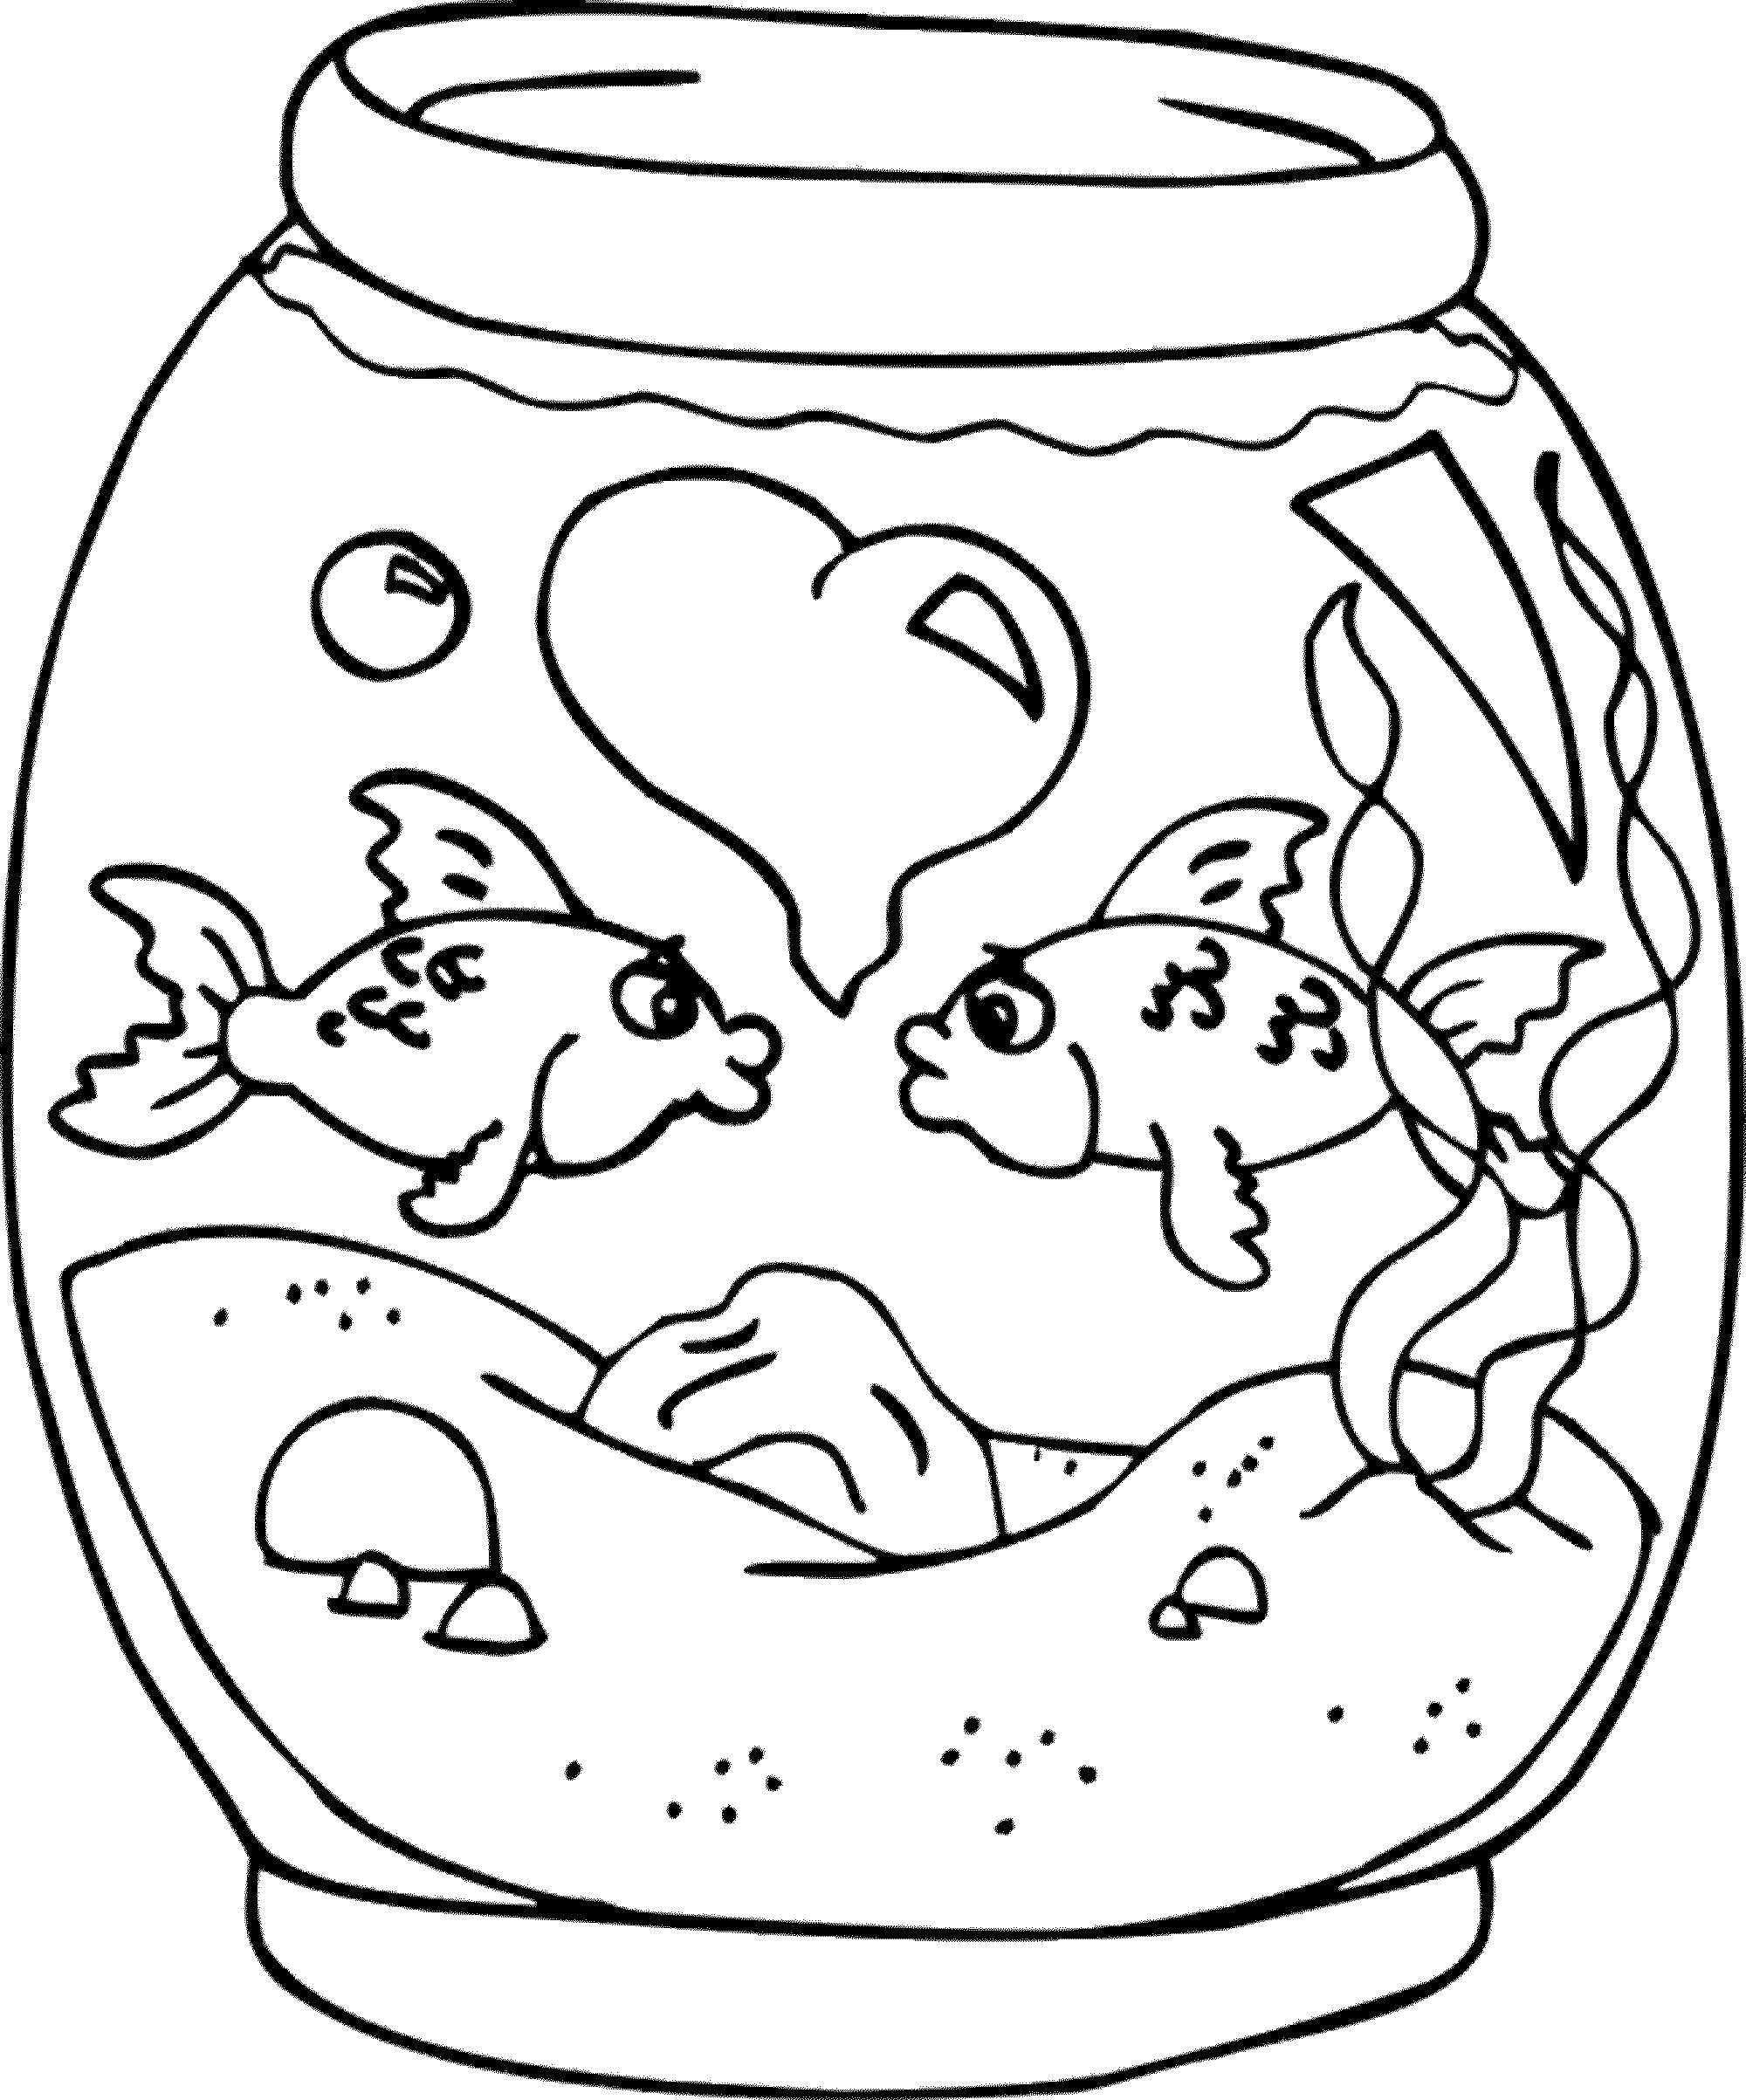 Coloring Lovers of fish in an aquarium. Category fish. Tags:  Fish, water, aquarium, love.